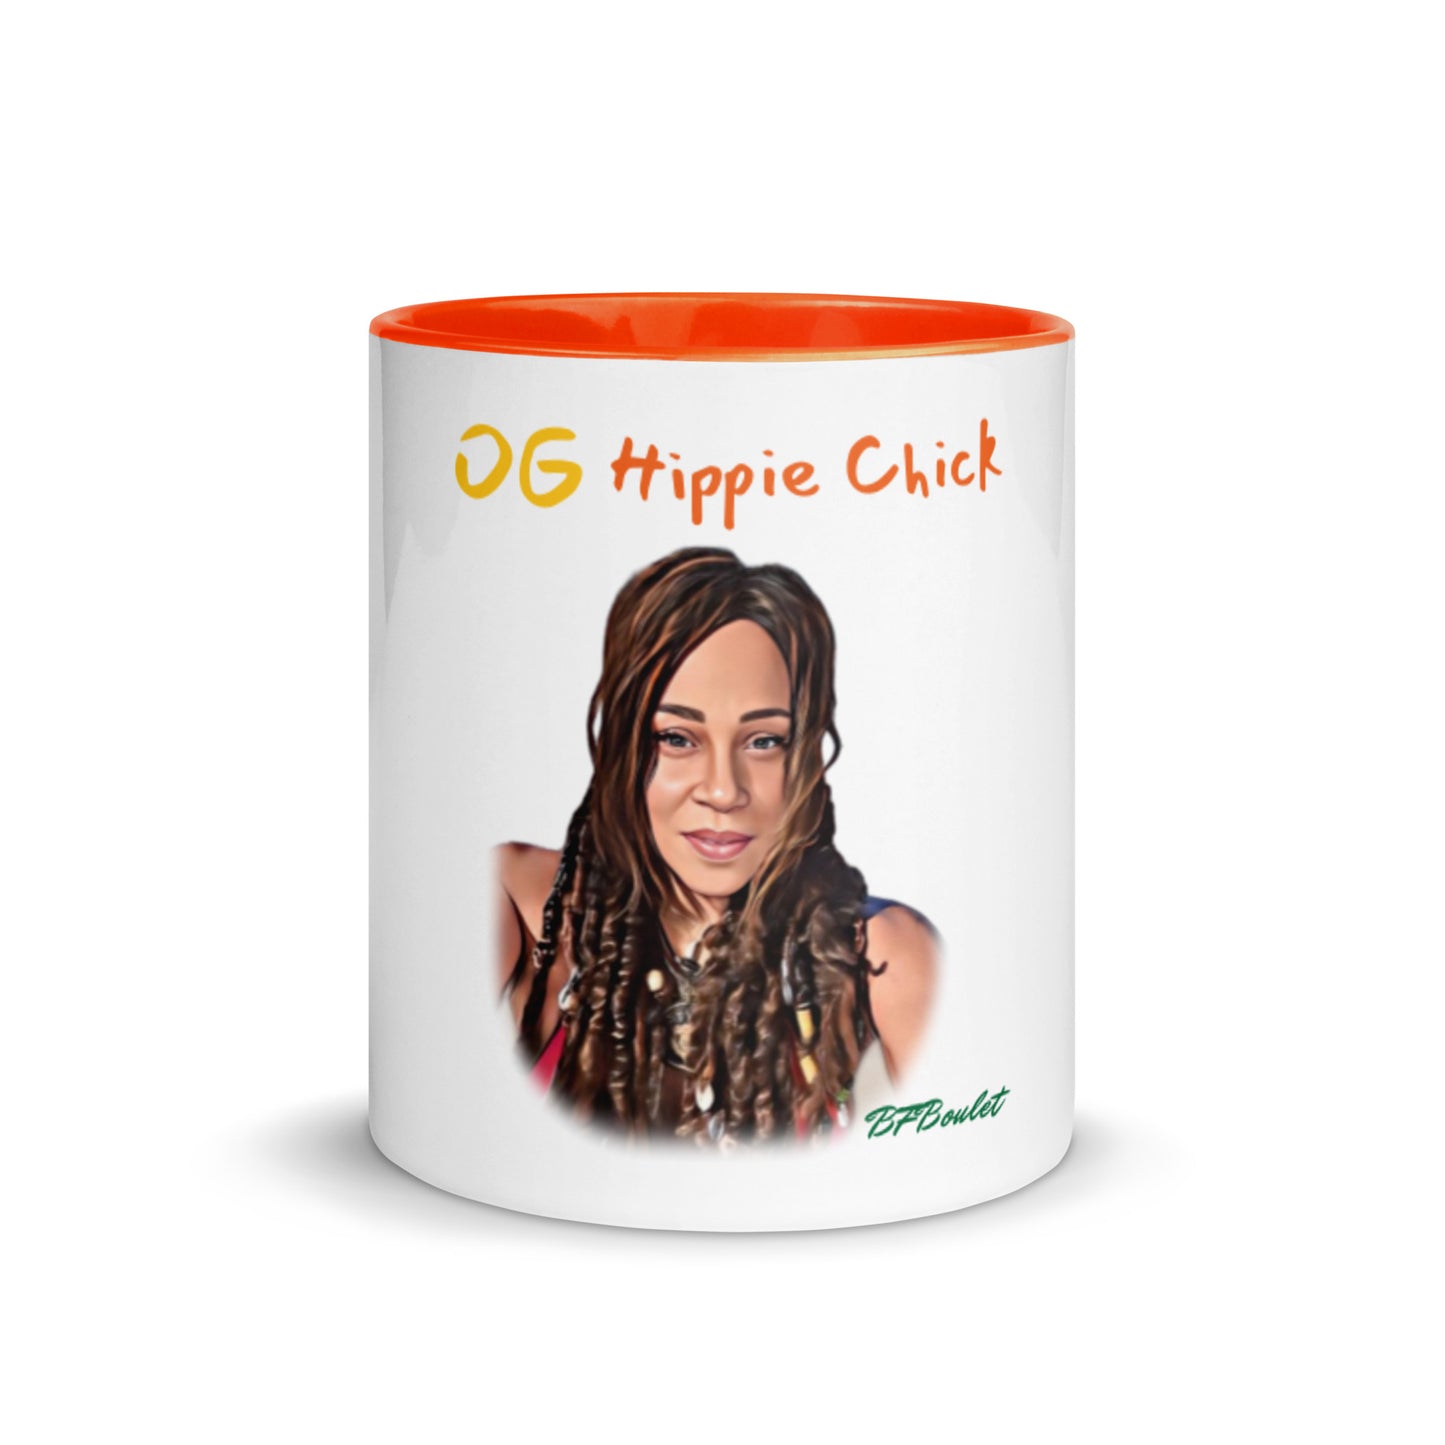 White Color Mug - OG Hippie Chick (BFBoulet)